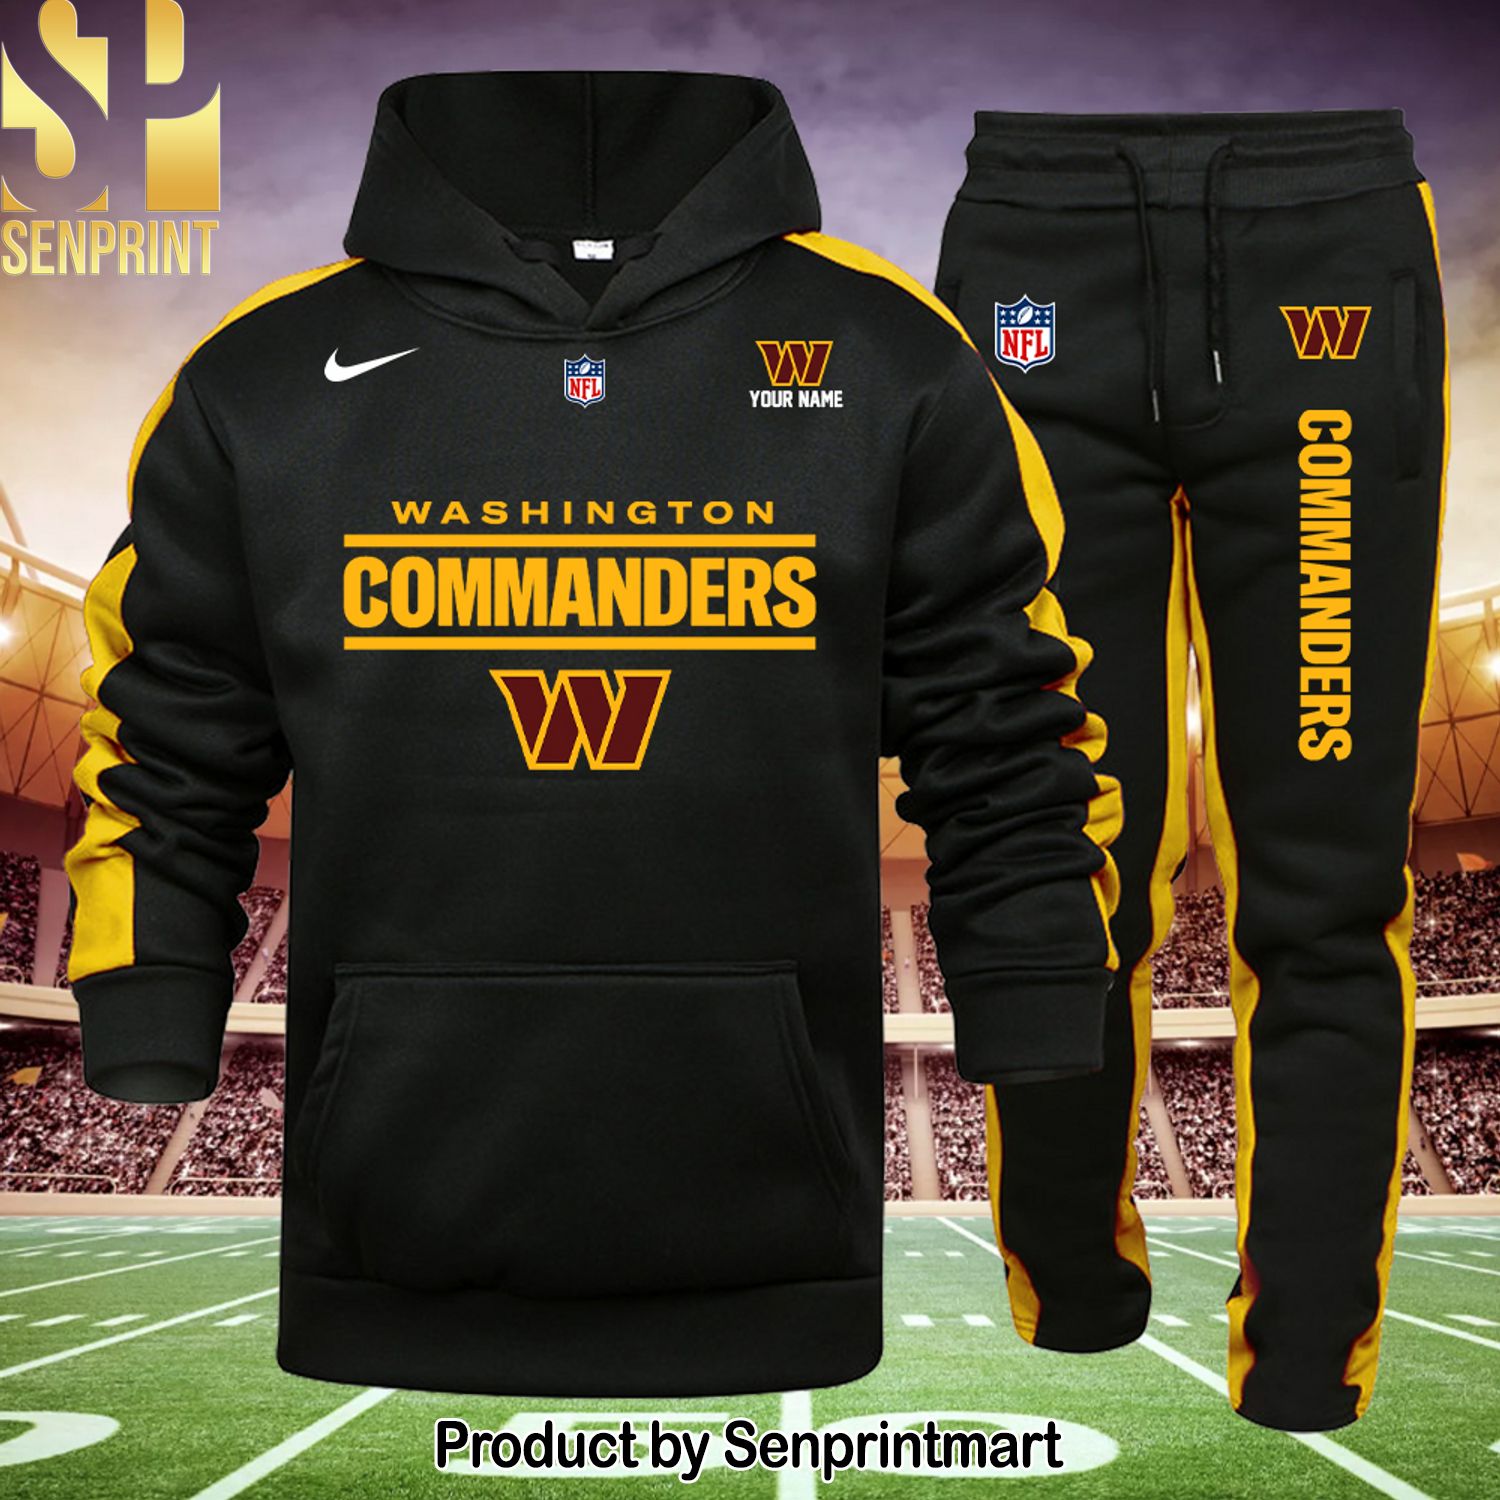 NFL Washington Commanders All Over Printed Shirt and Sweatpants